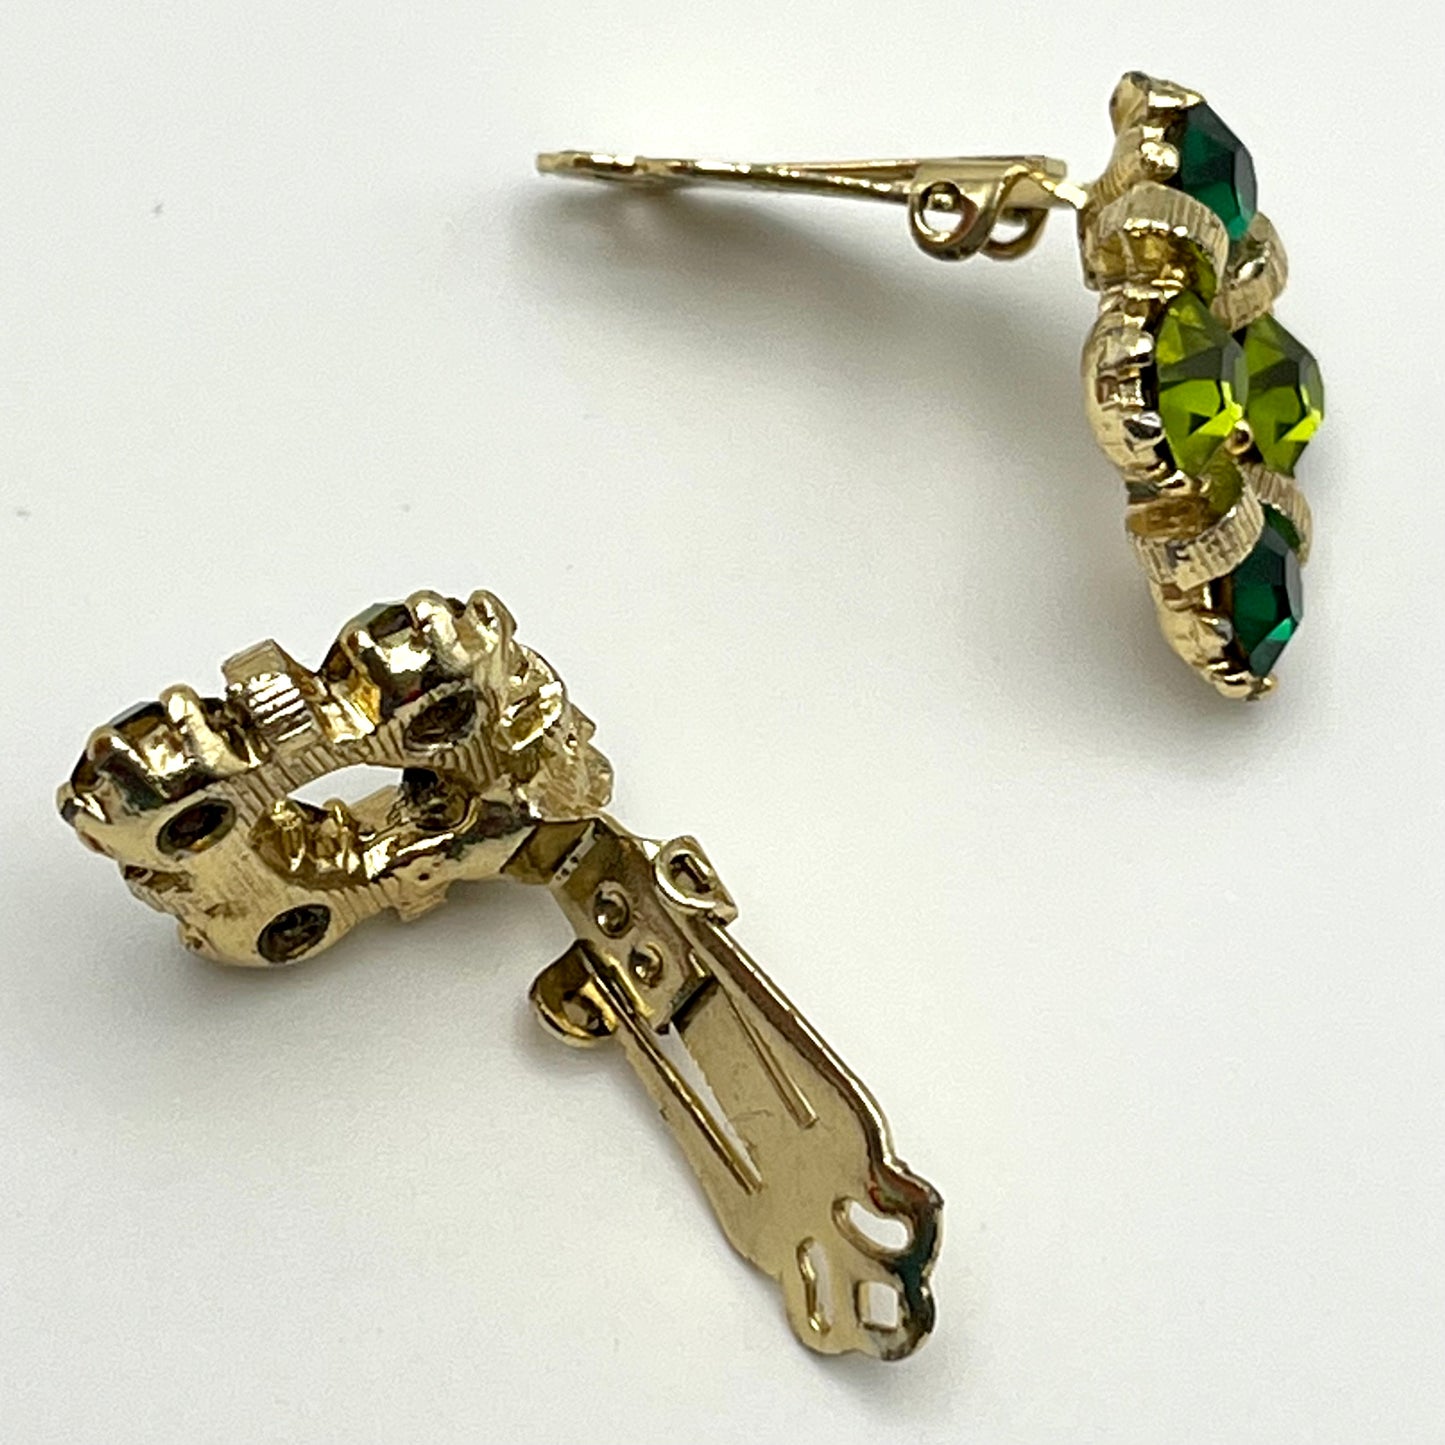 1960s Green Rhinestone Earrings